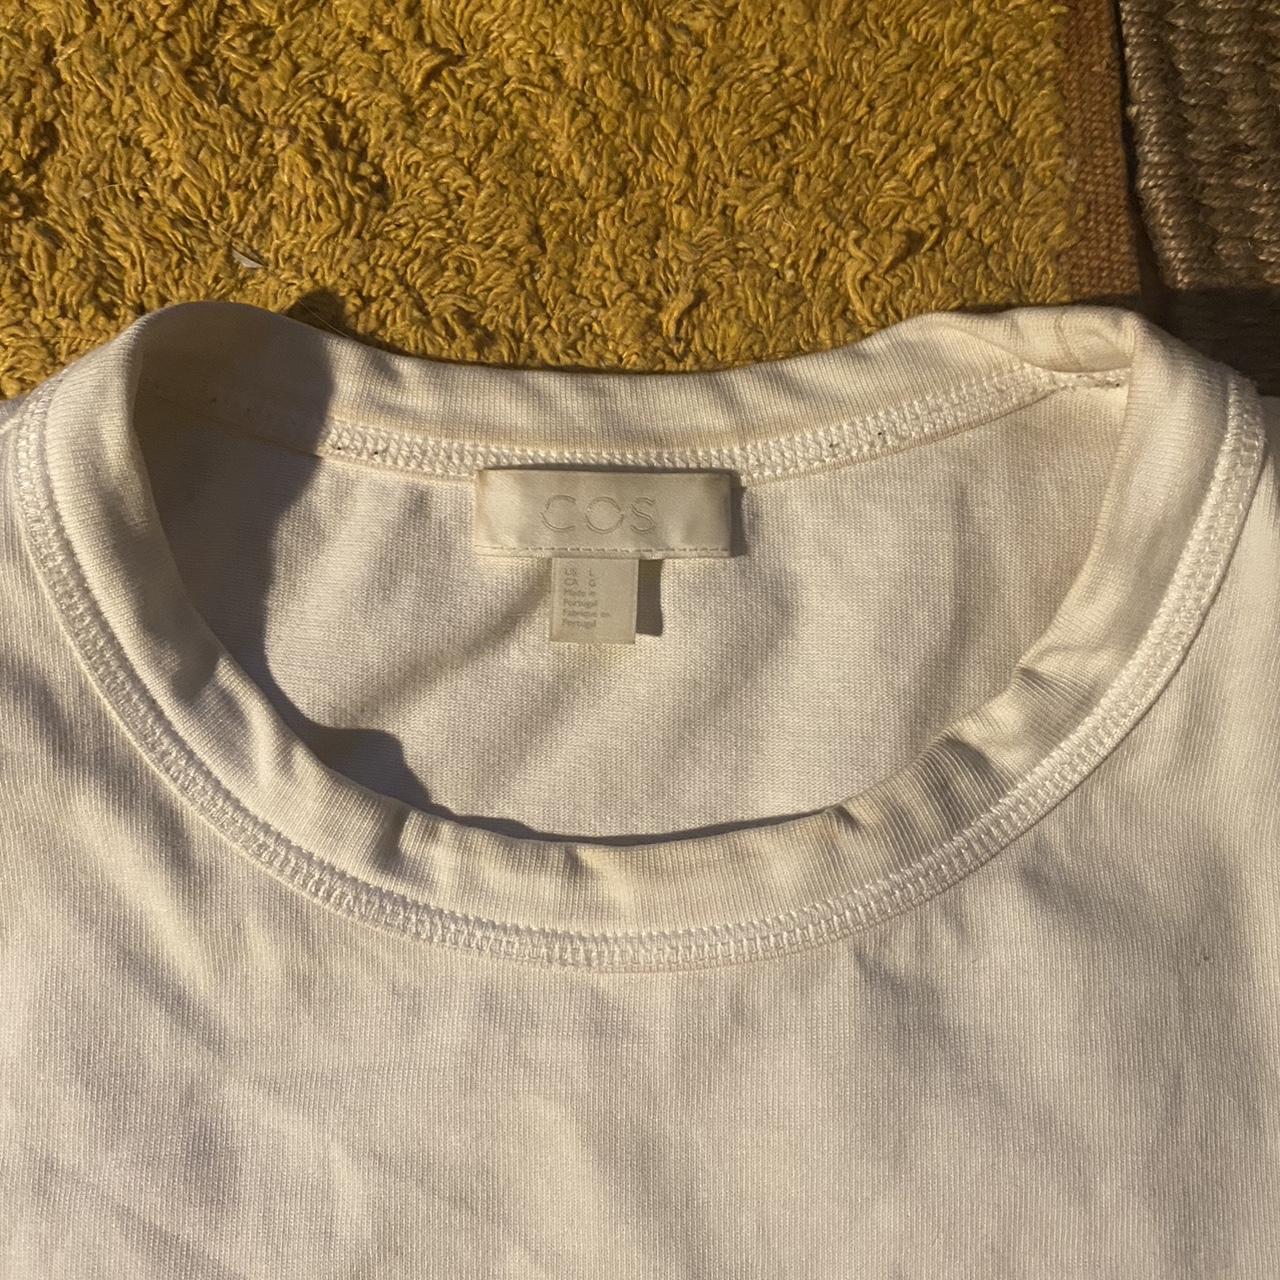 Details- COS plain white oversized tee shirt Minor... - Depop